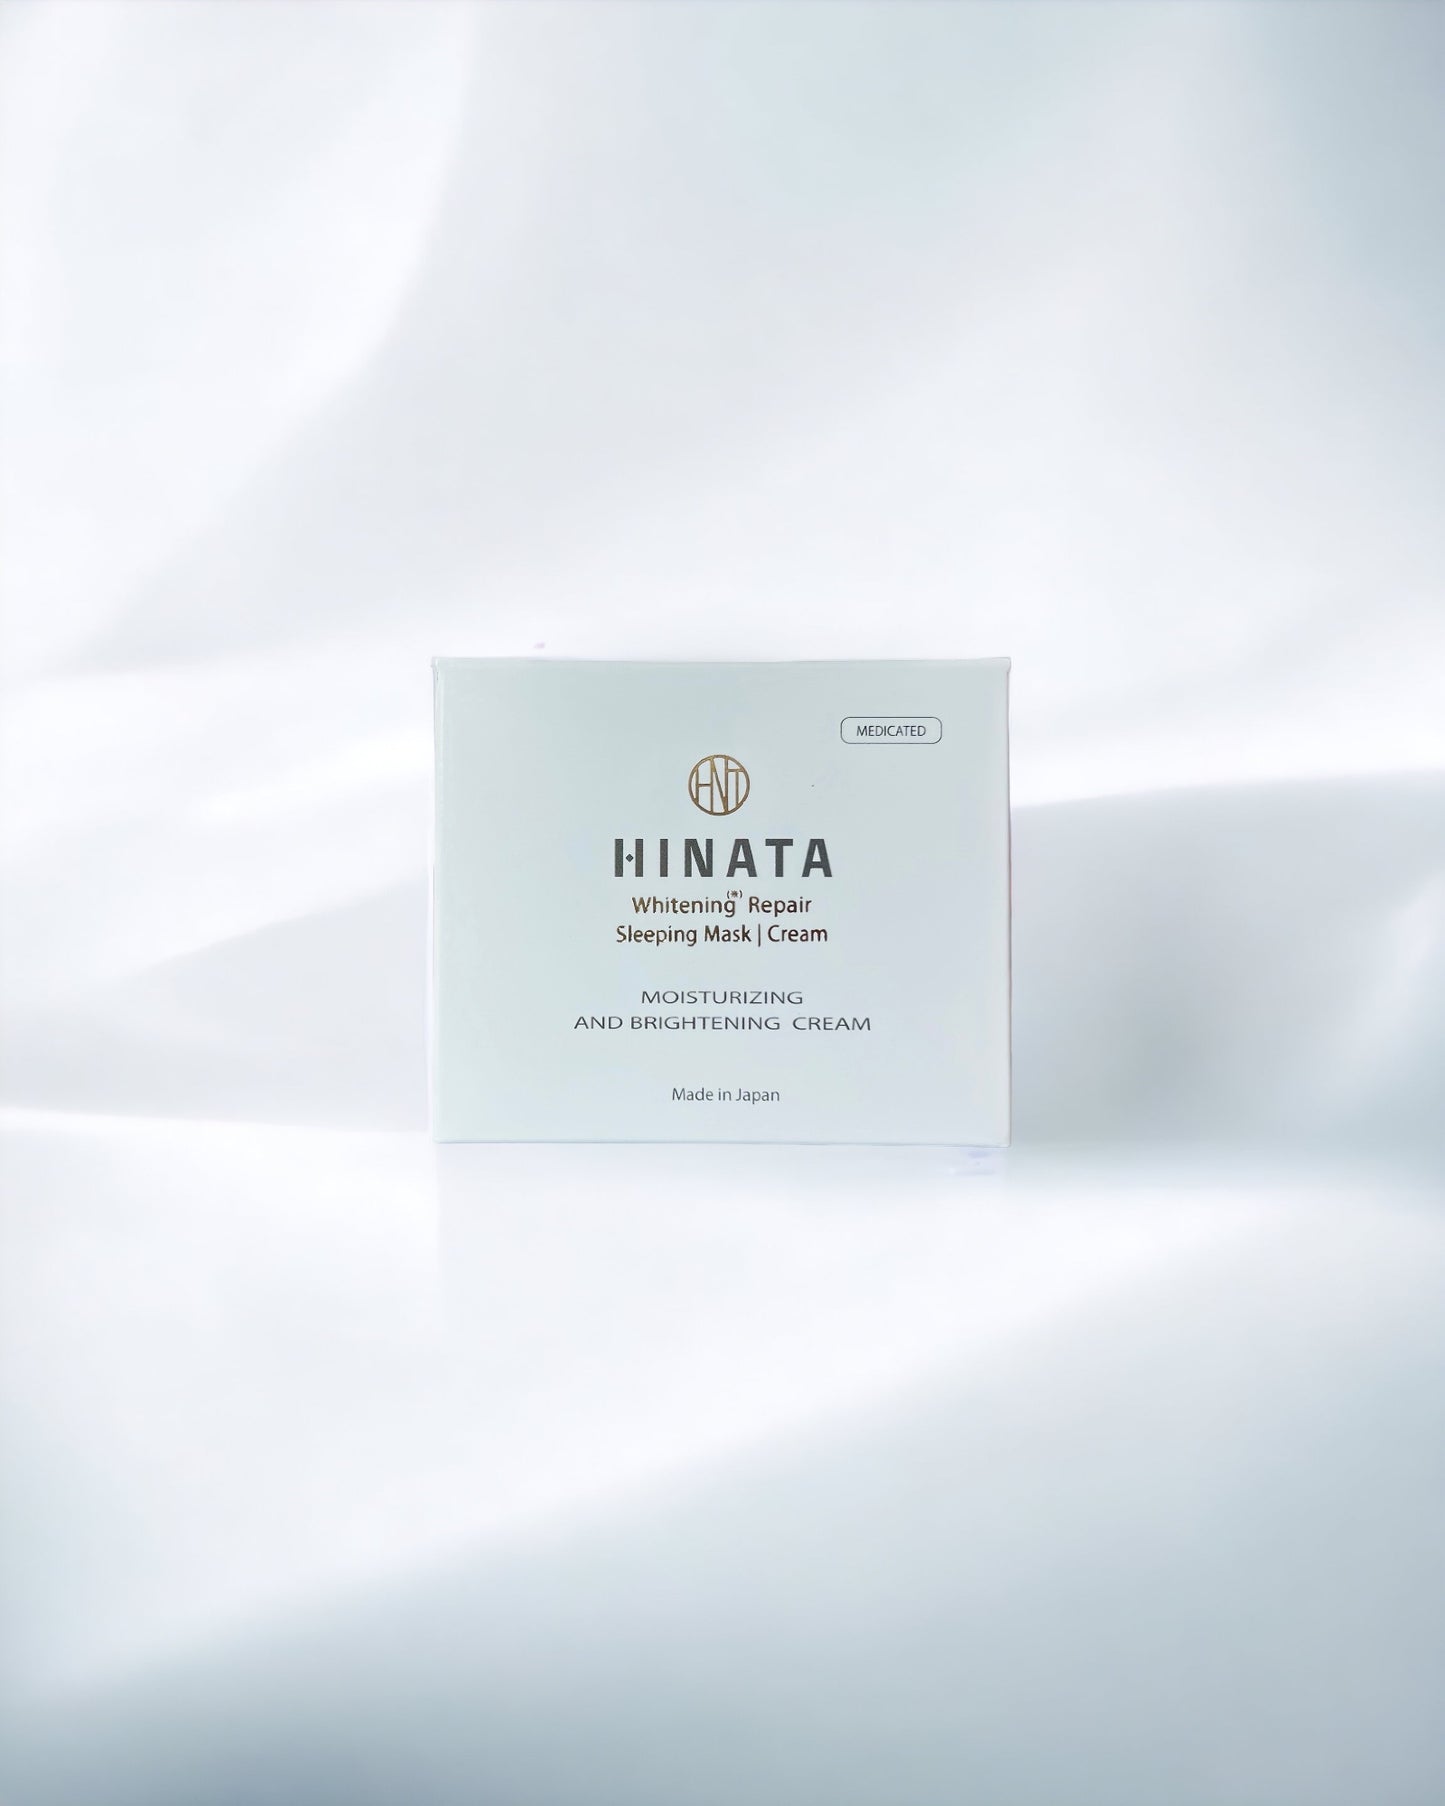 2. HINATA Whitening Repair Sleeping Mask | Cream: Prevent future (black) spots with placenta whitening